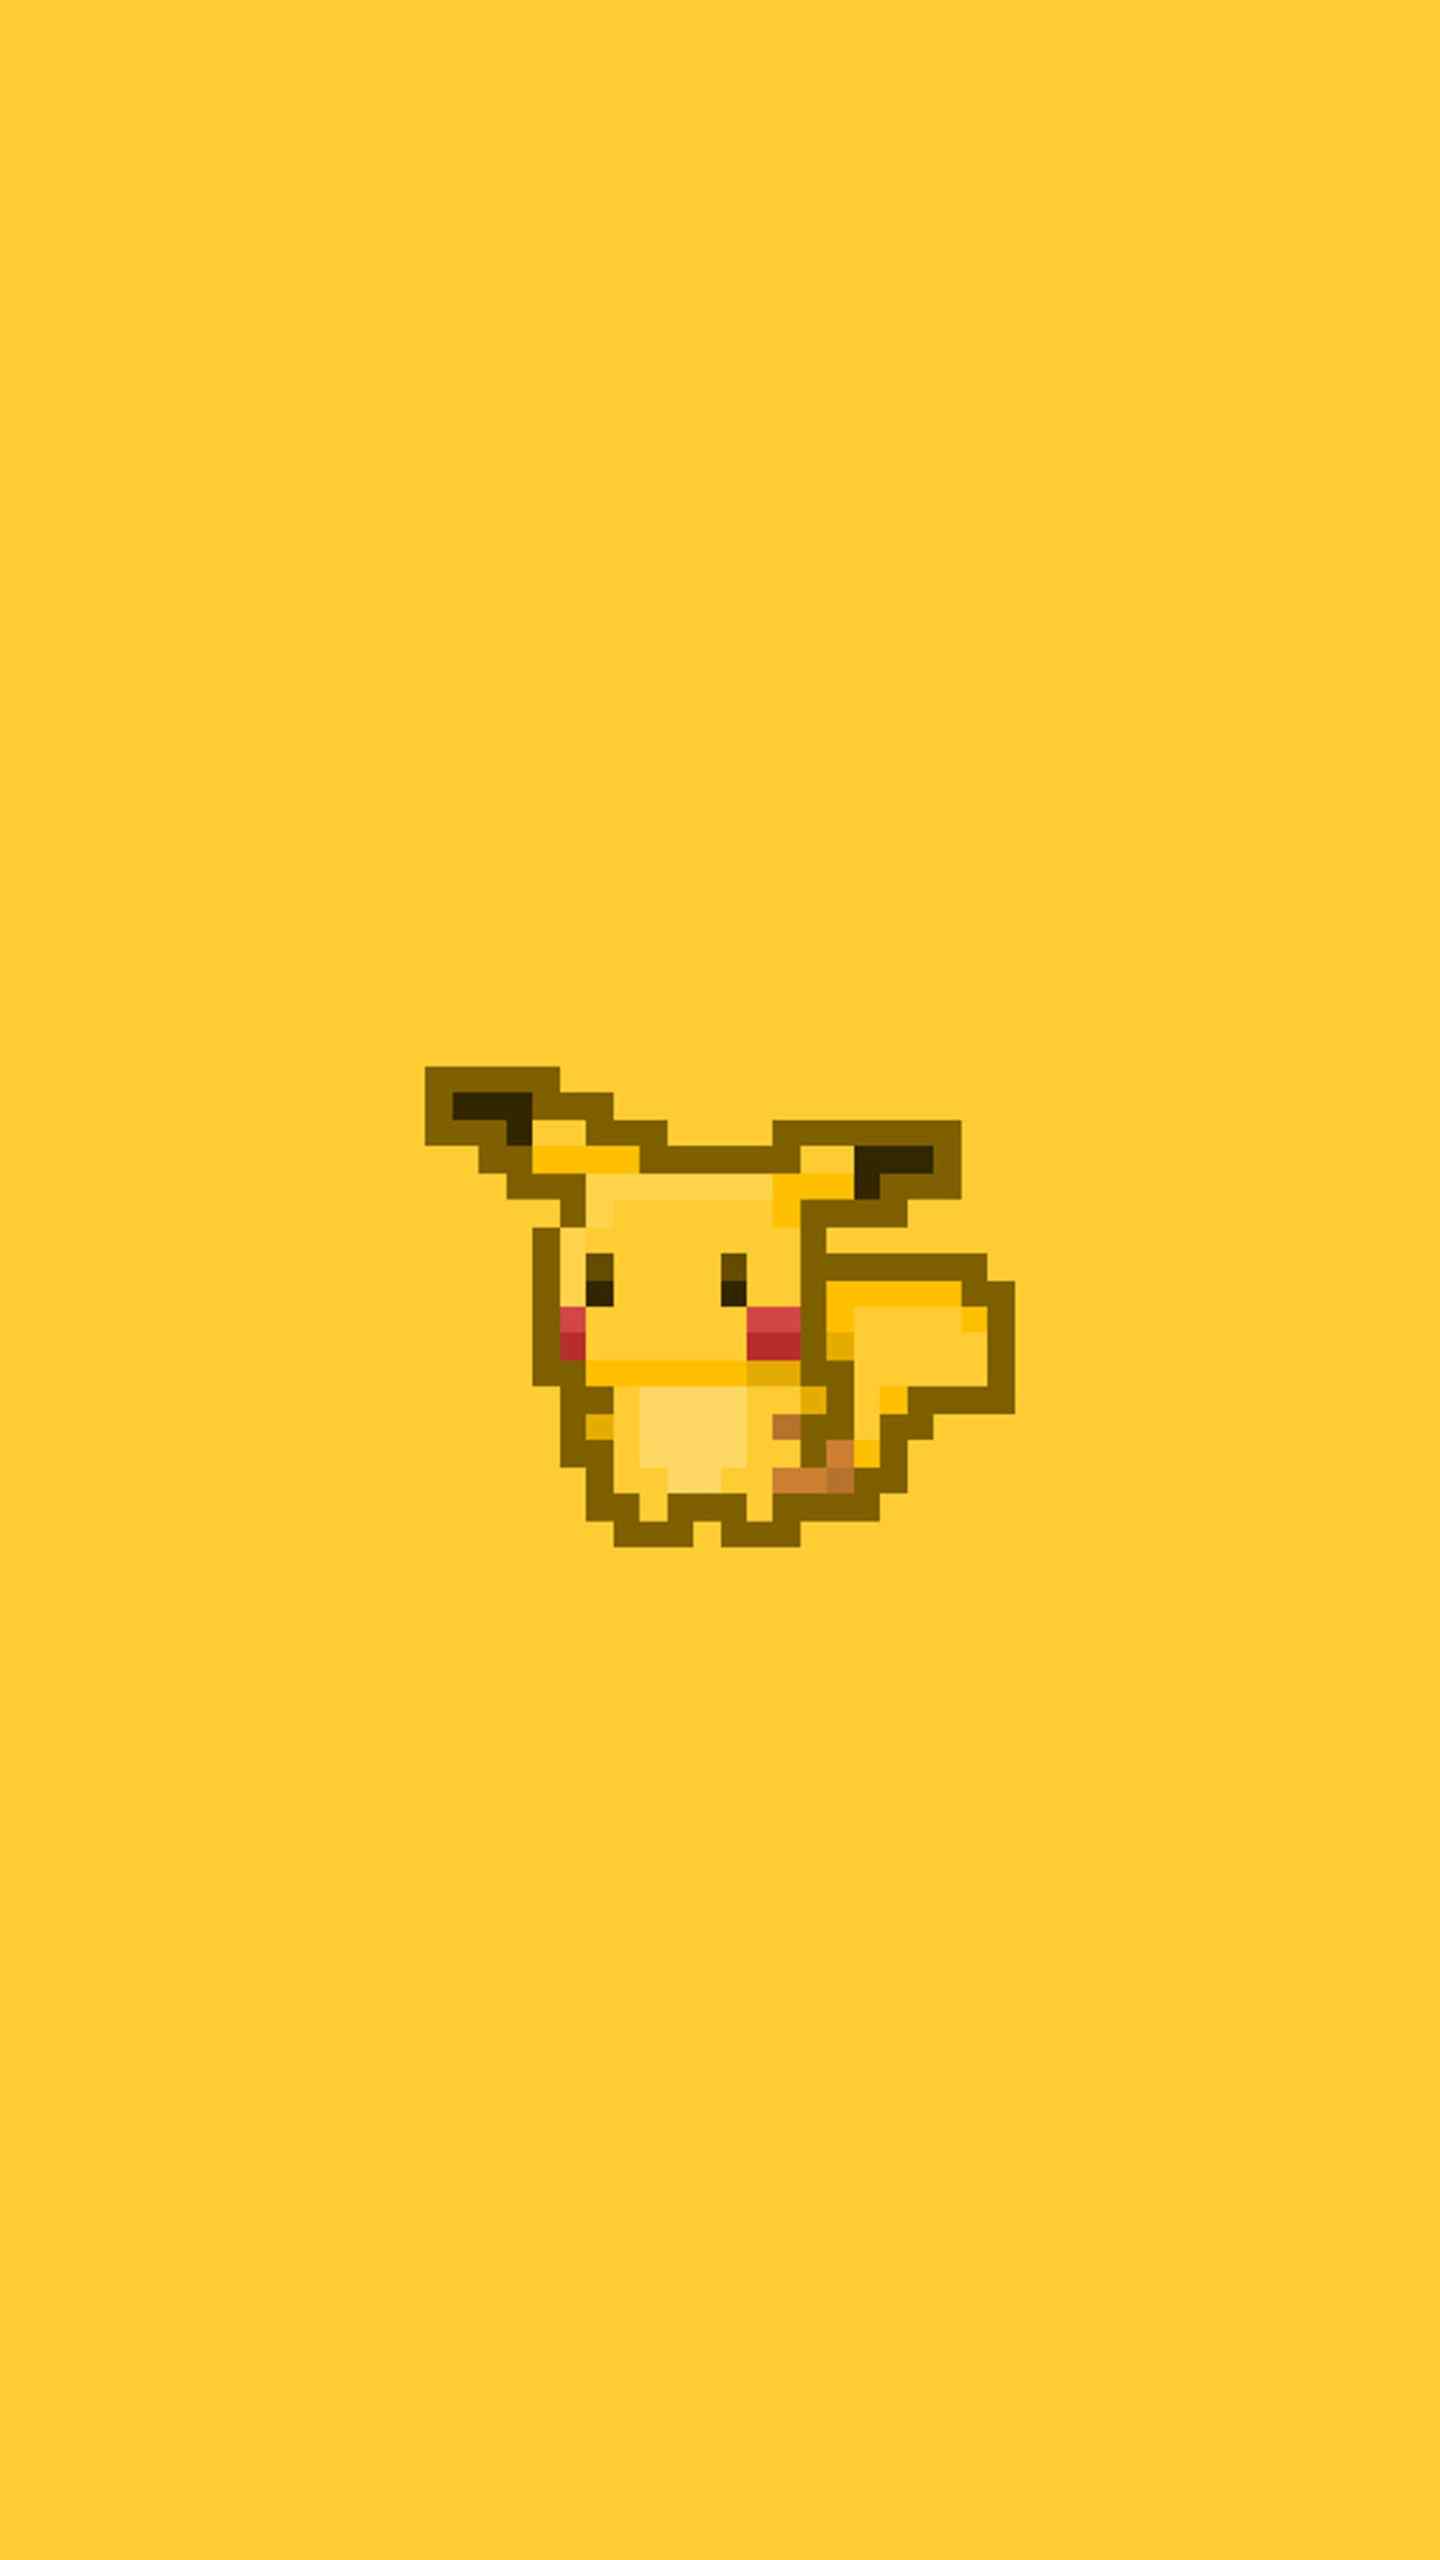 Pikachu Game Yellow Wallpaper Sc Smartphone